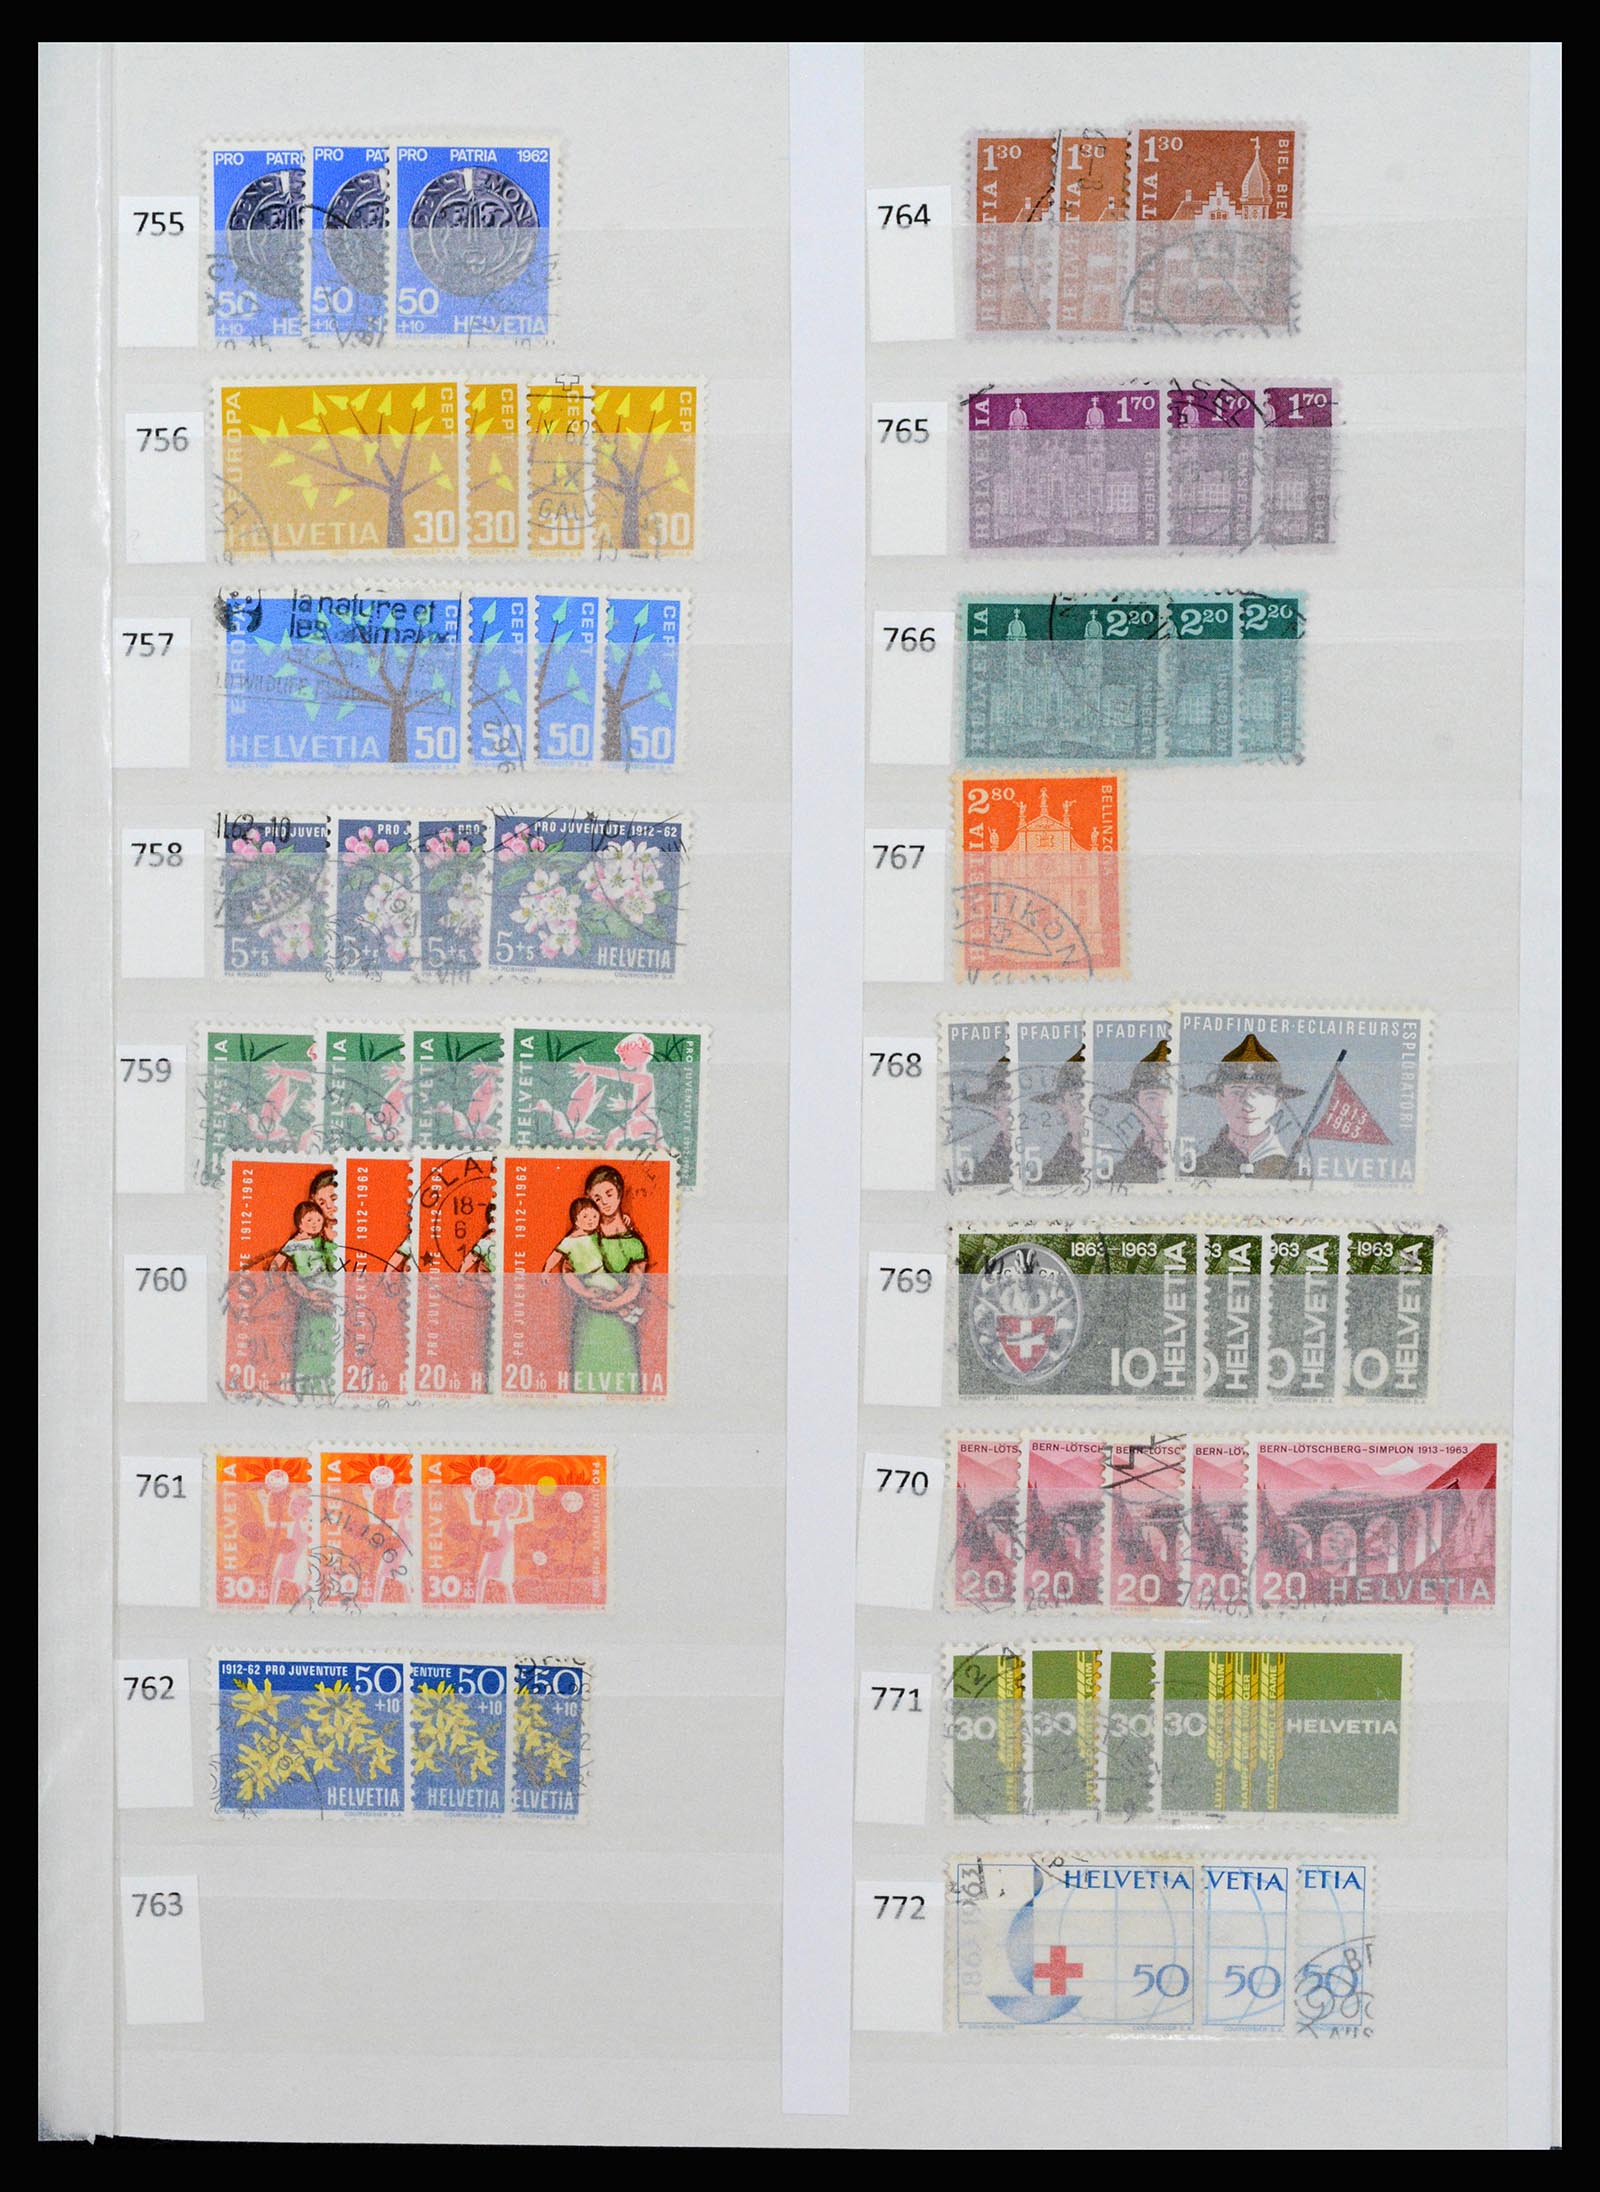 37252 040 - Stamp collection 37252 Switzerland 1900-2011.